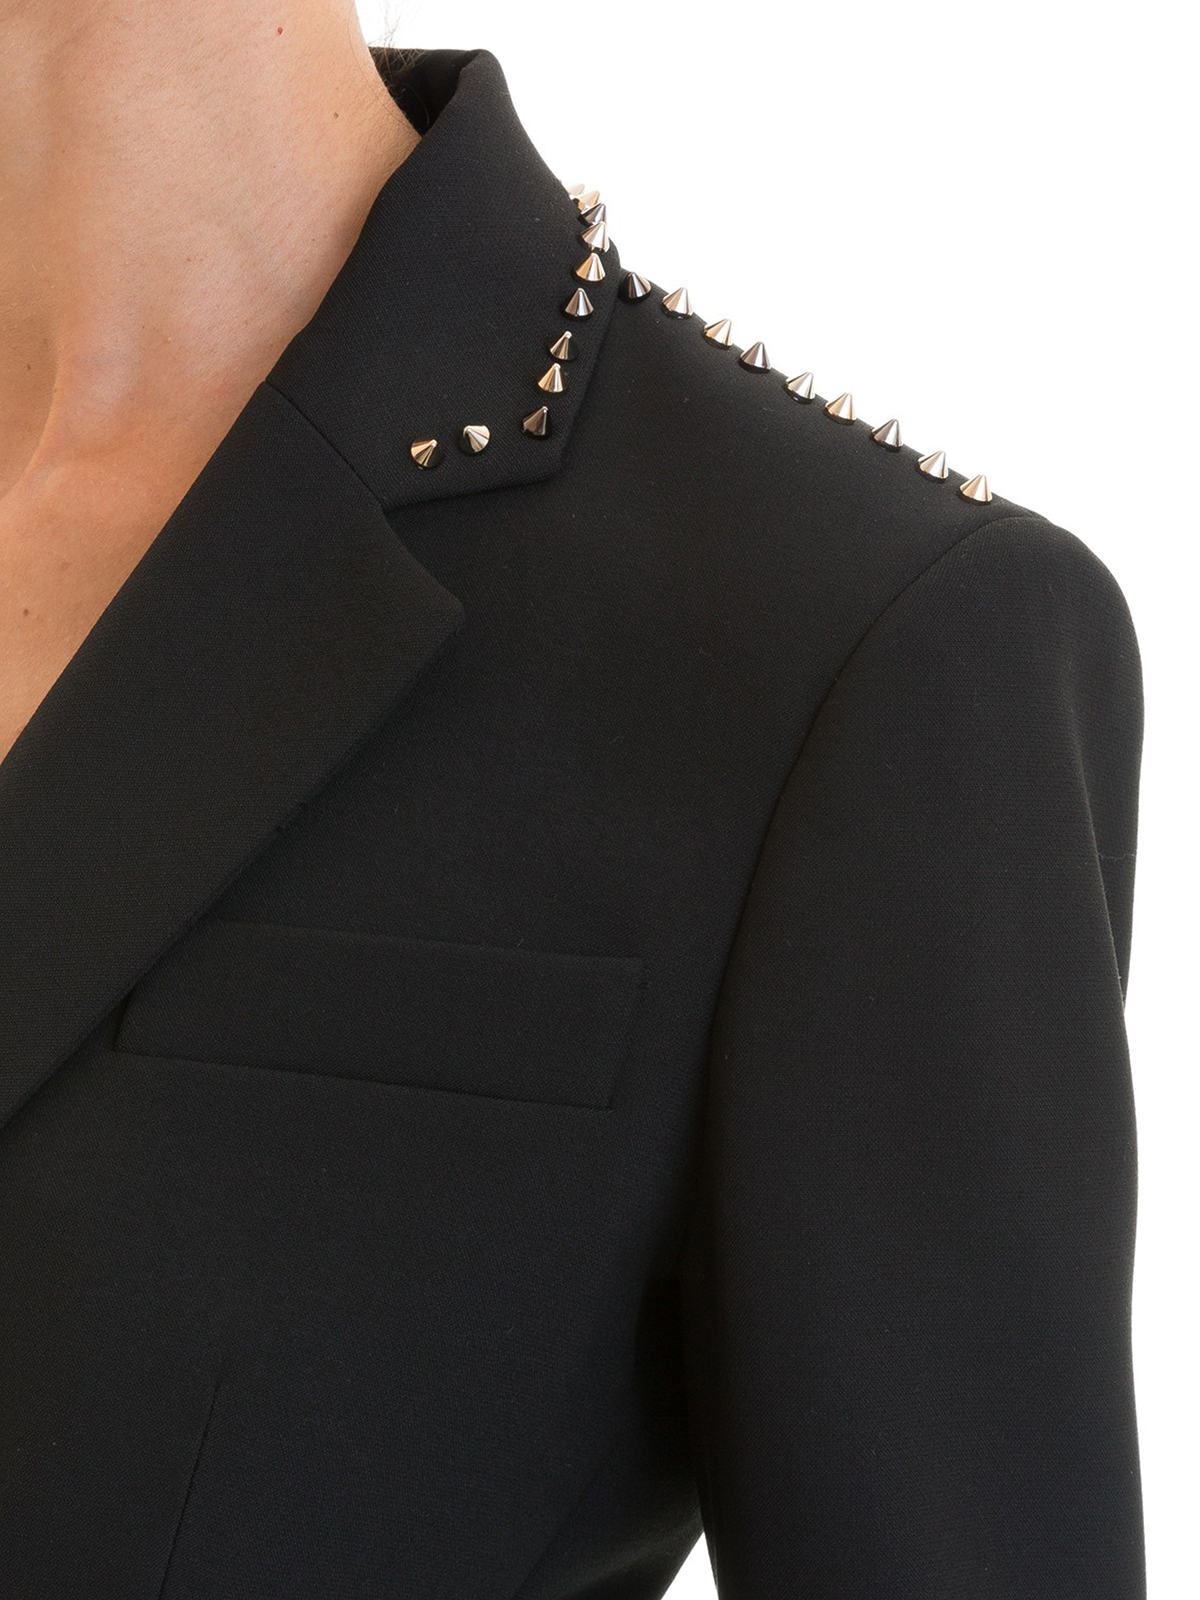 Versace Collection - Elegante blazer nero con borchie - giacche blazer -  G35688G600556G1008